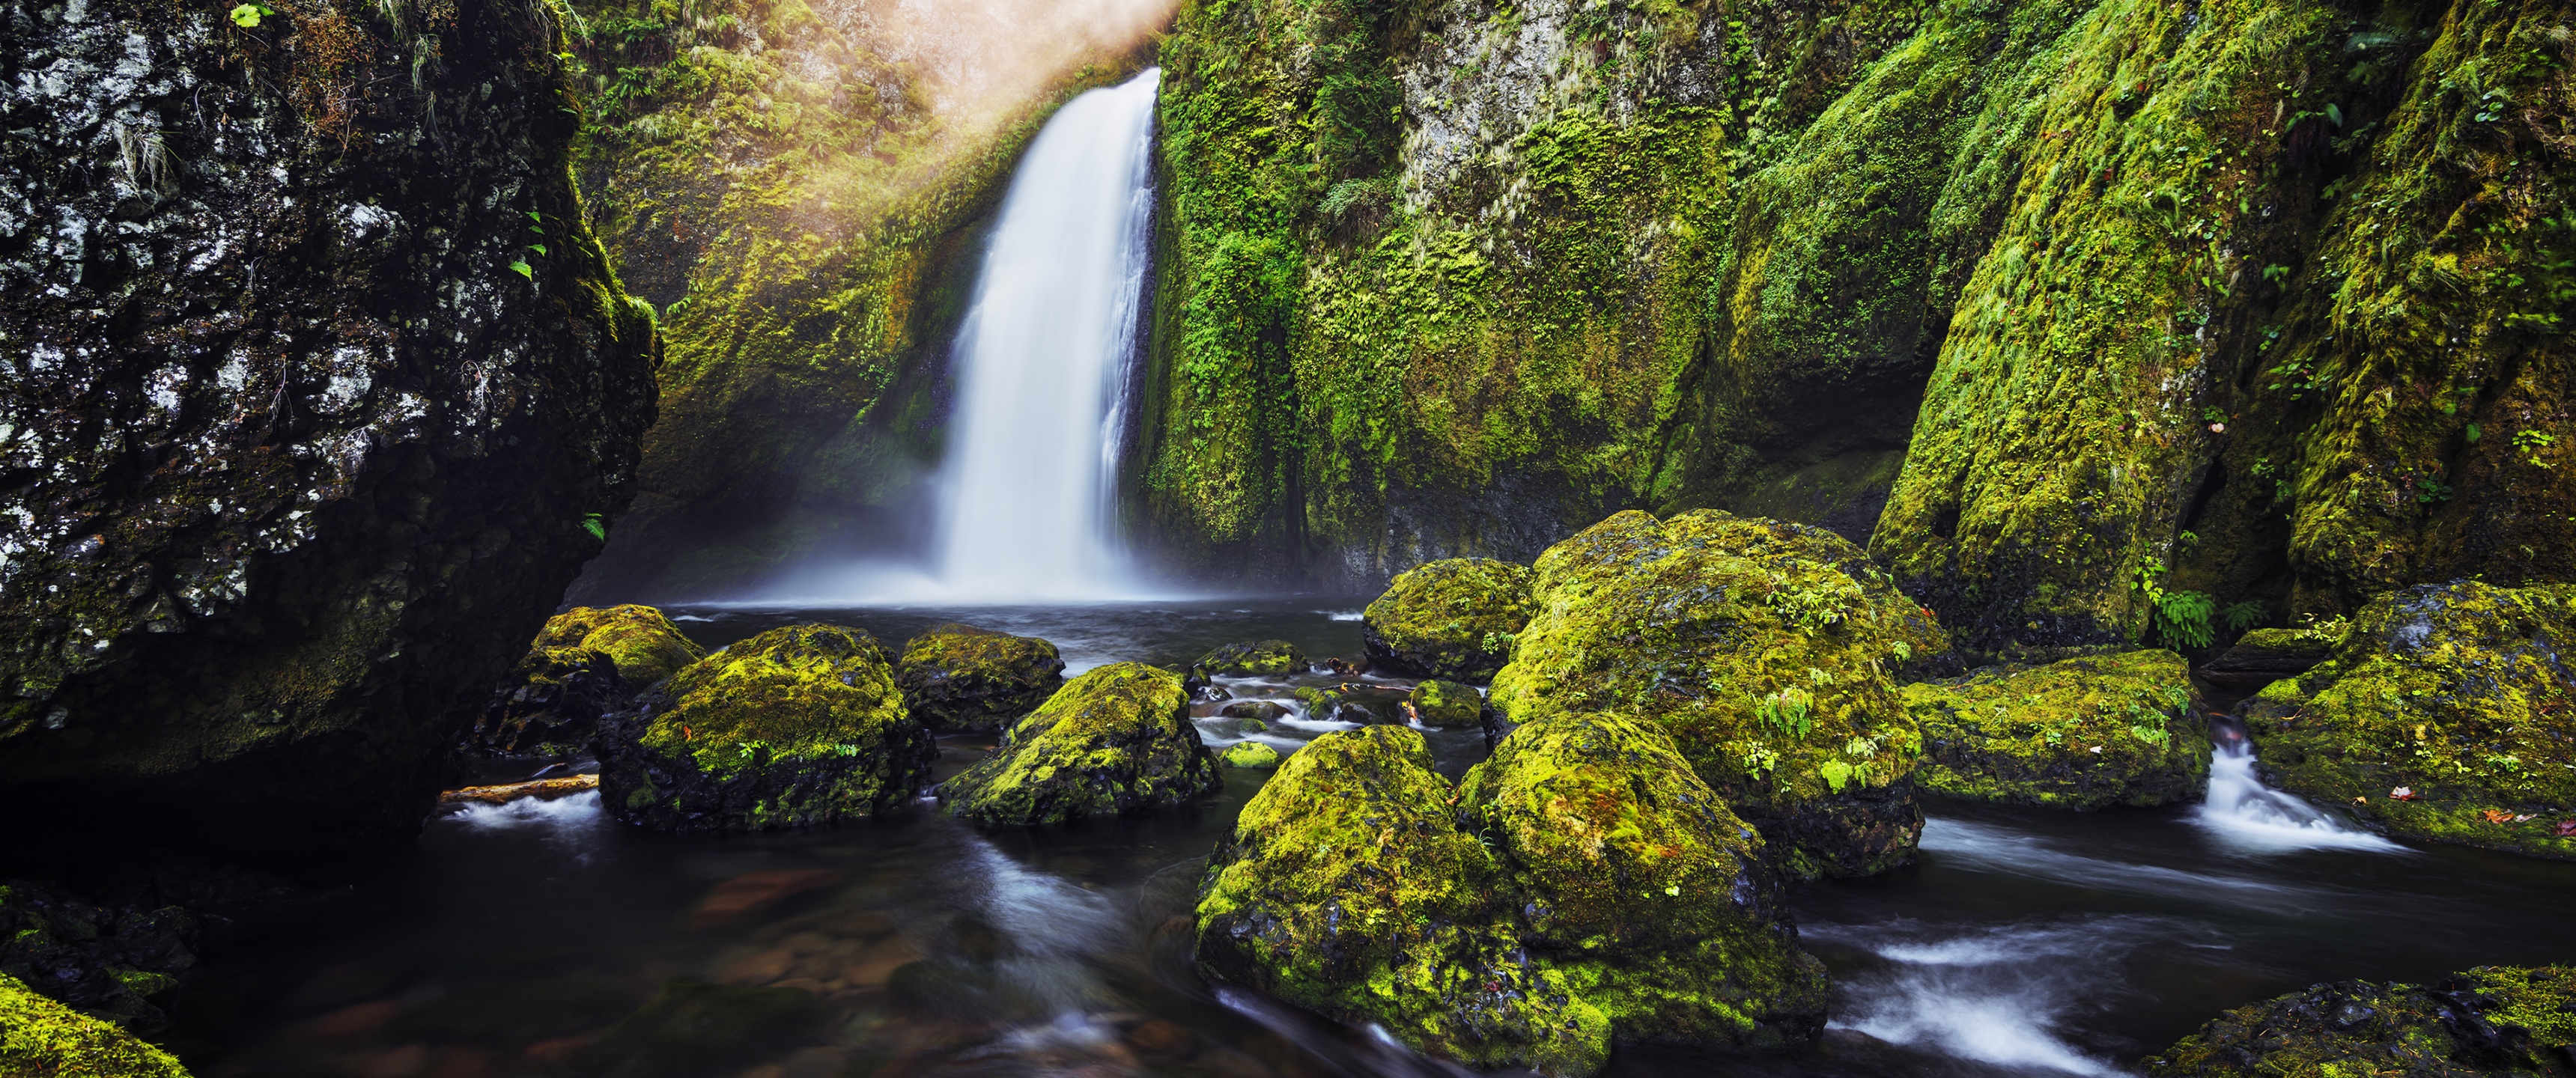 Waterfalls Wallpaper 4K, Green Moss, Water Stream, Long exposure, HDR, Nature